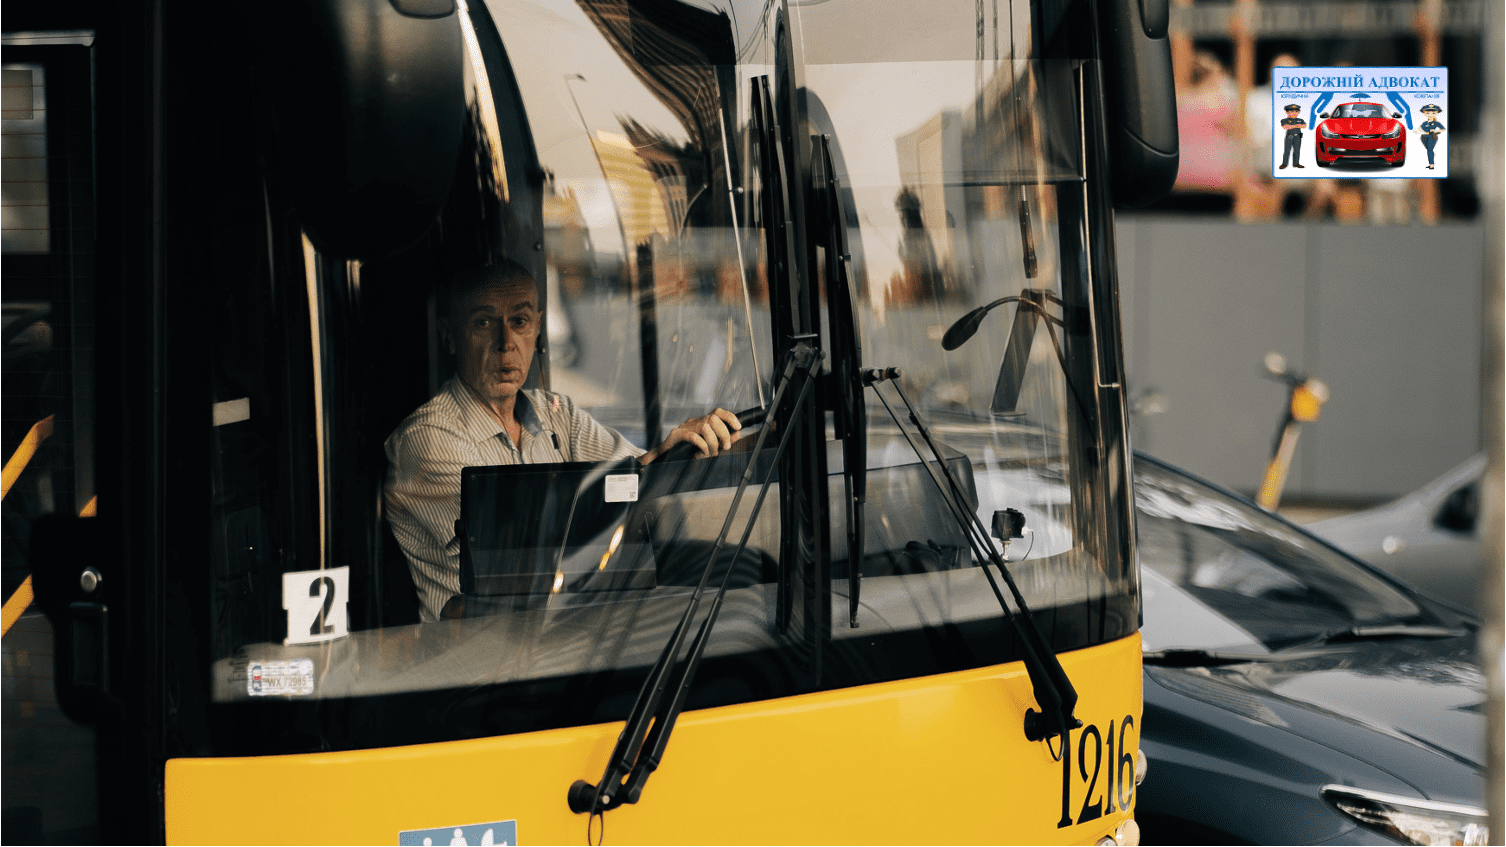 Особистий поліс водія автобус пасажири пасажирський штраф Укртрансбезпекаоскаржити адвокат